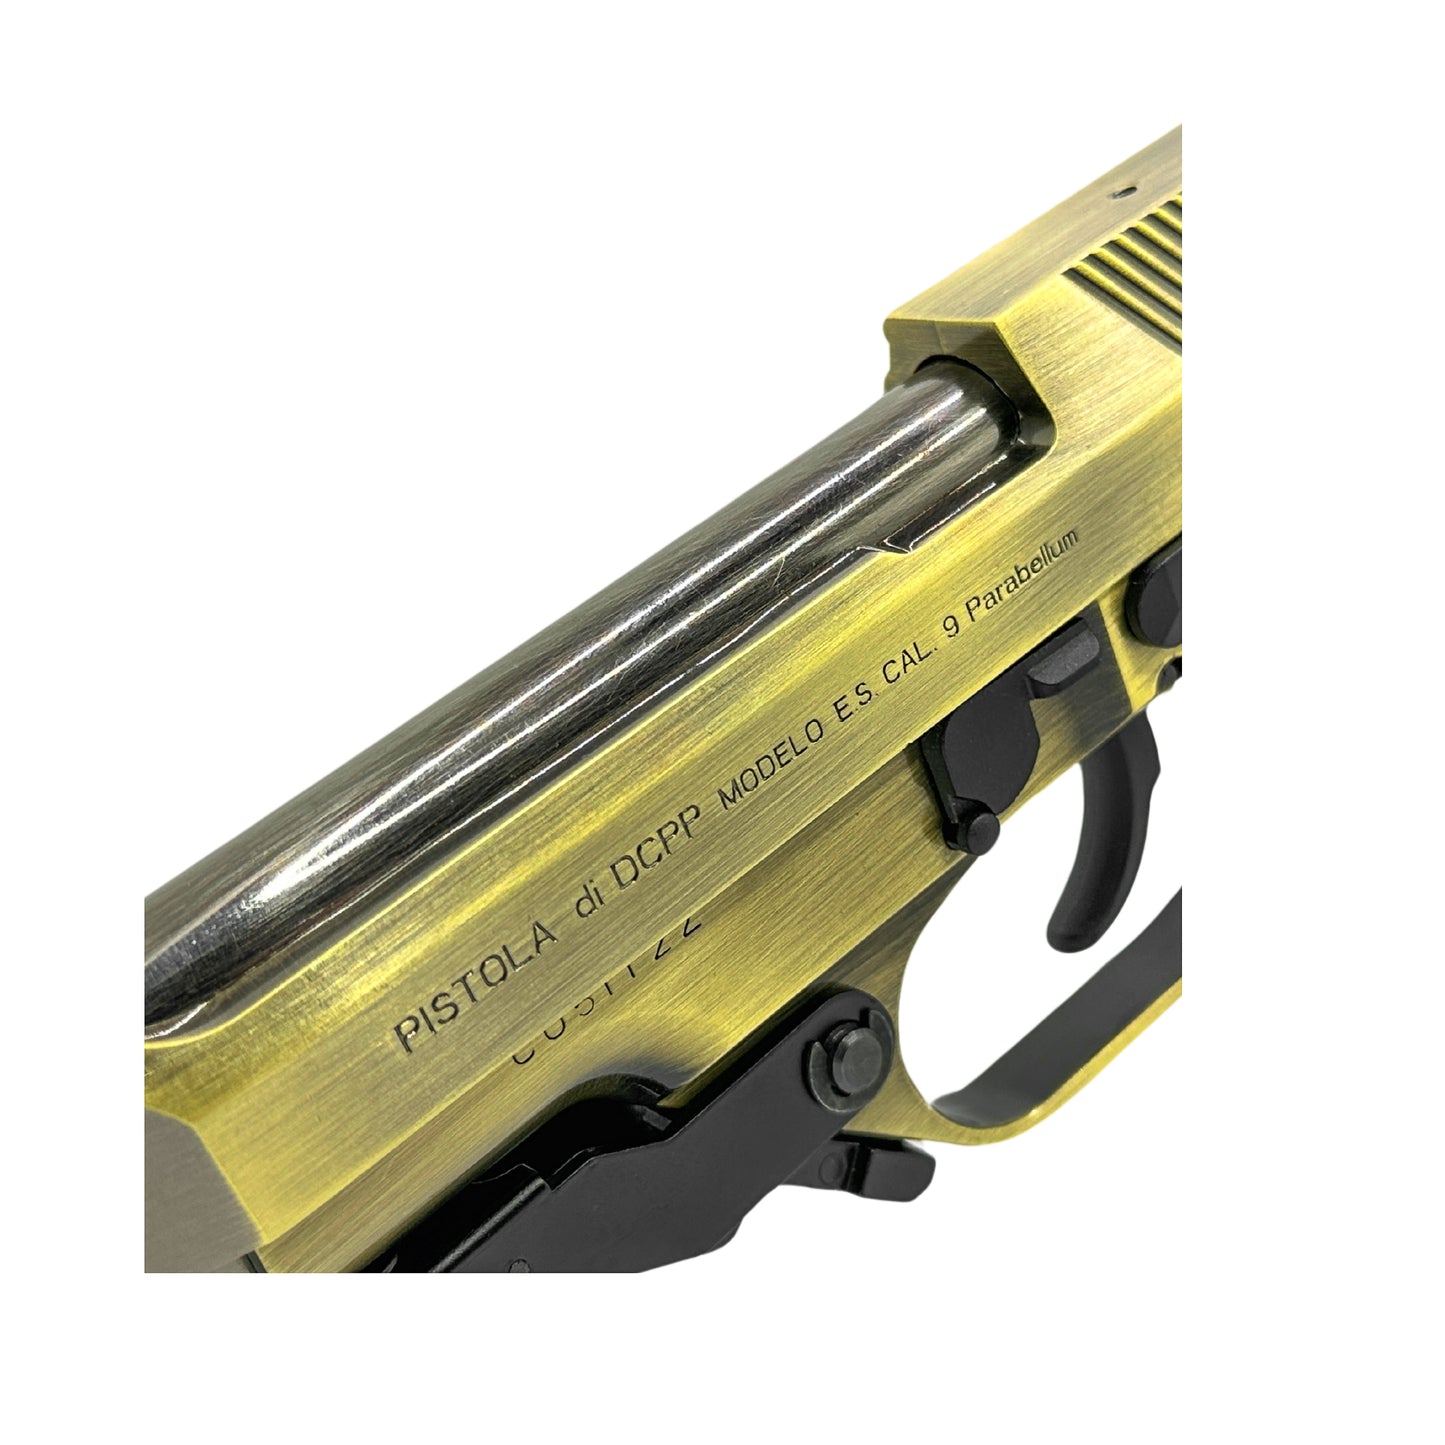 Beretta 93R Metal Manual Pistol - Gel Blaster